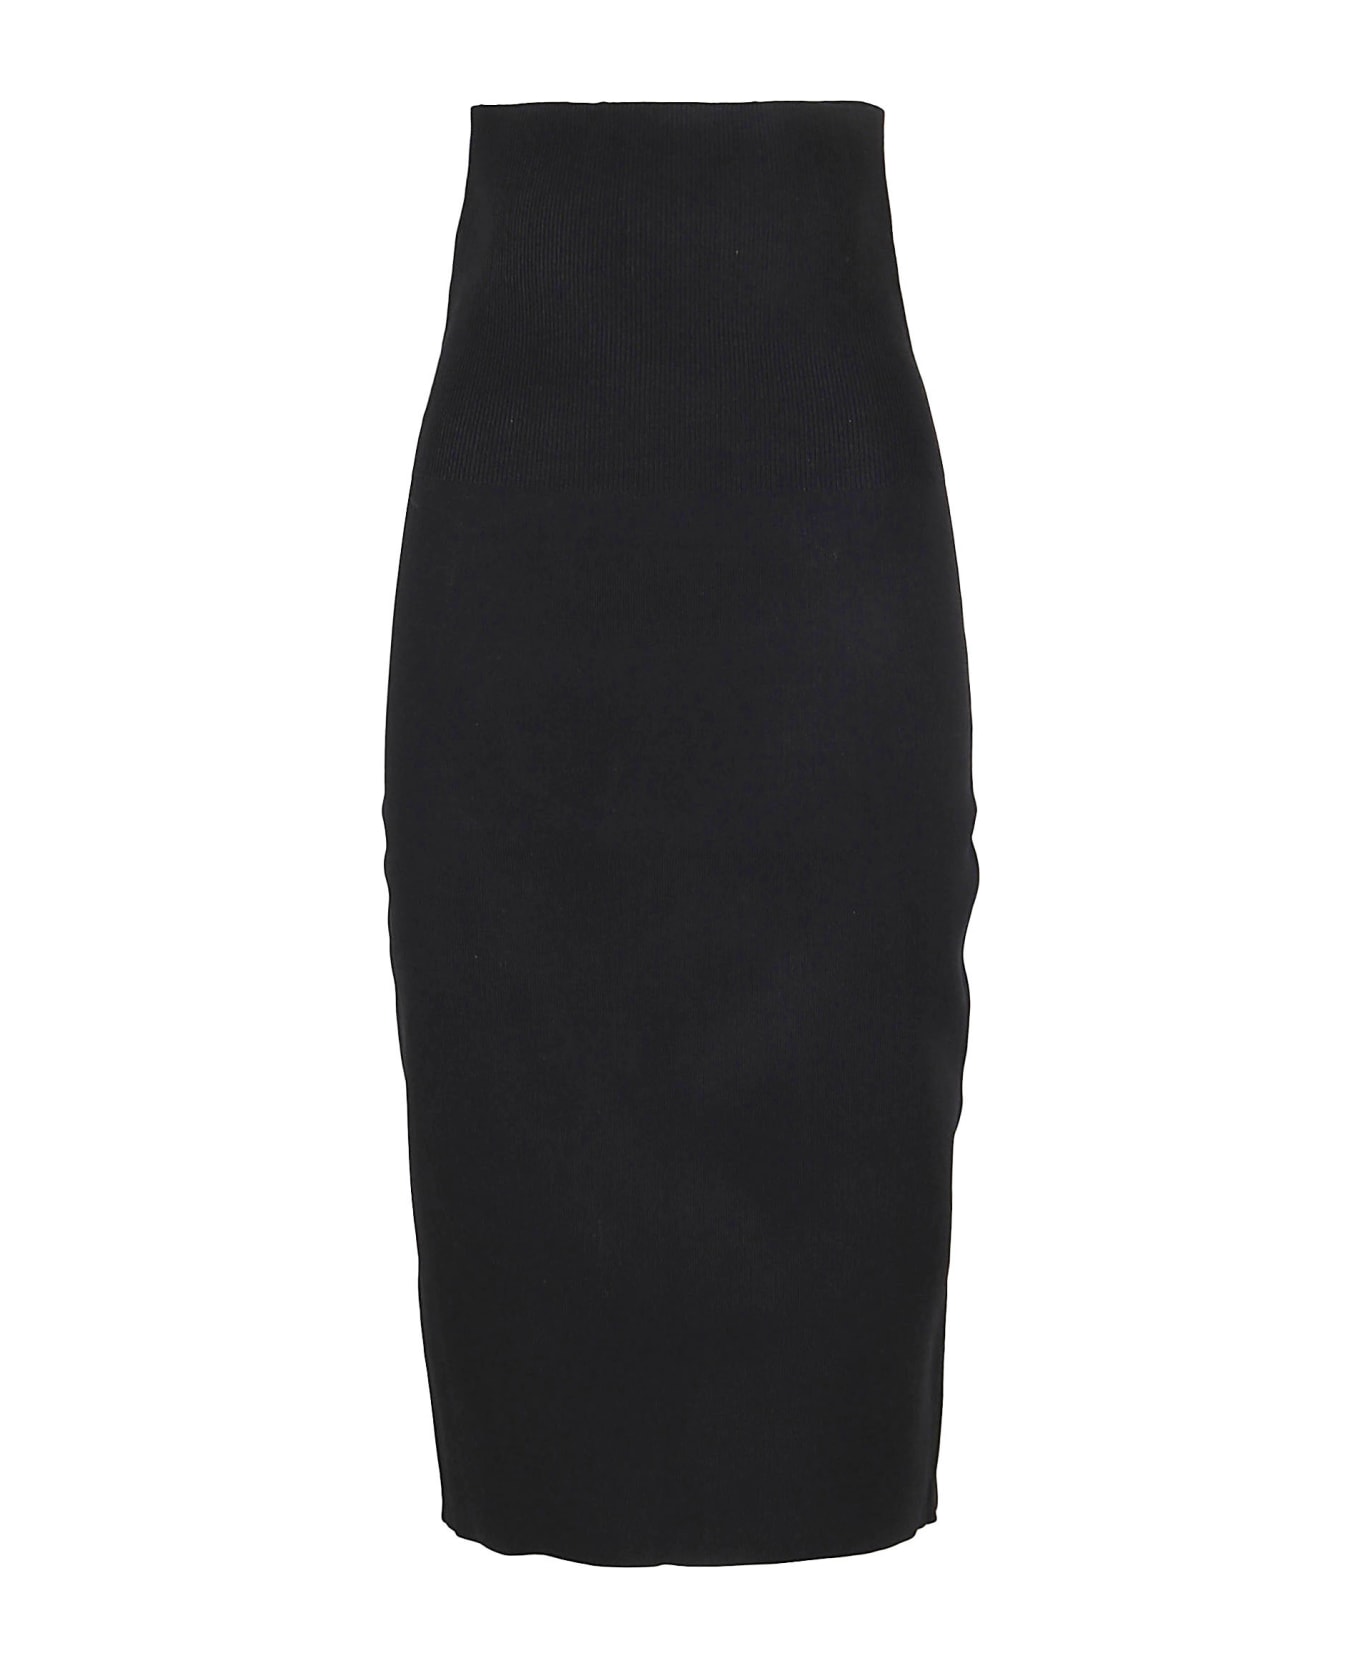 Victoria Beckham Fitted Skirt - BLACK